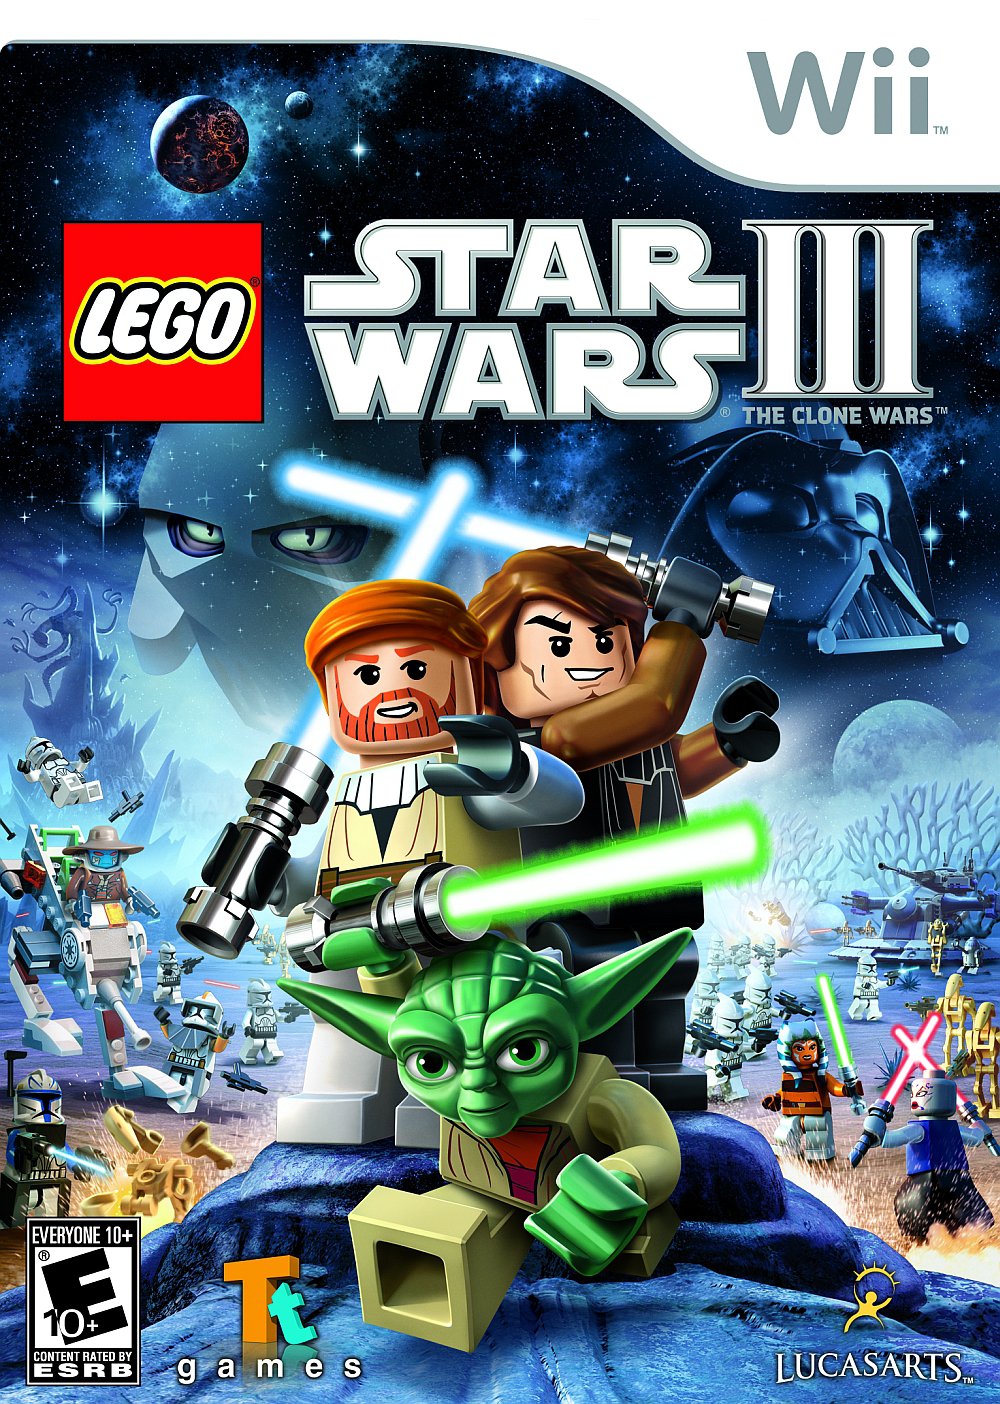 download lego star wars wii u